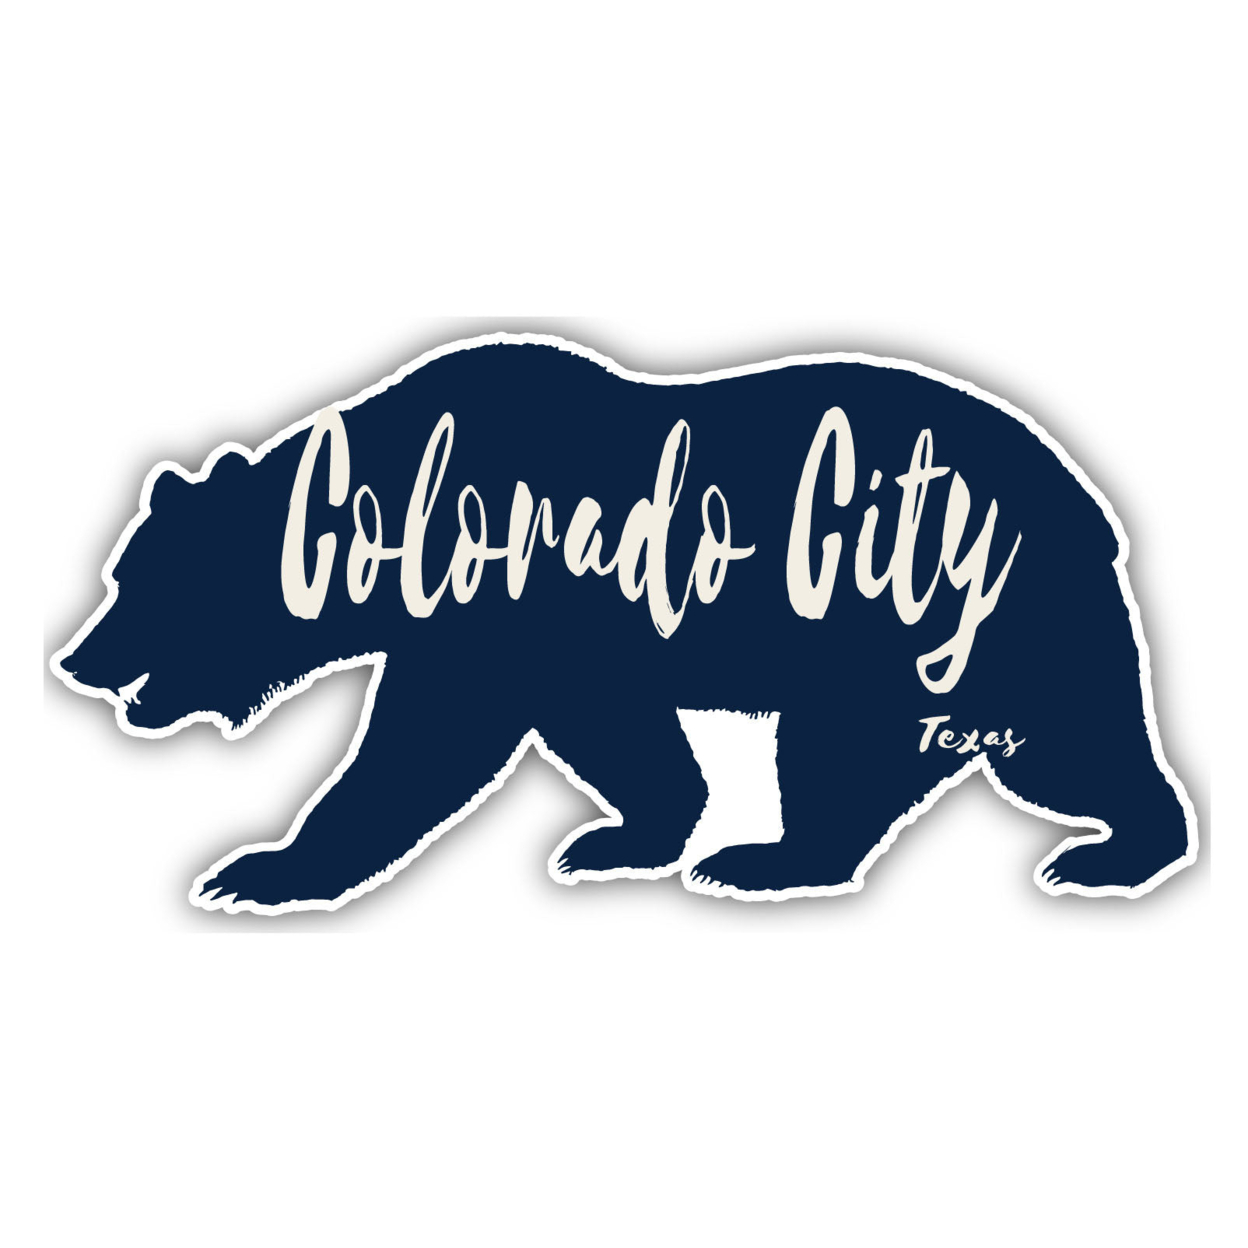 Colorado City Texas Souvenir Decorative Stickers (Choose Theme And Size) - Single Unit, 4-Inch, Bear